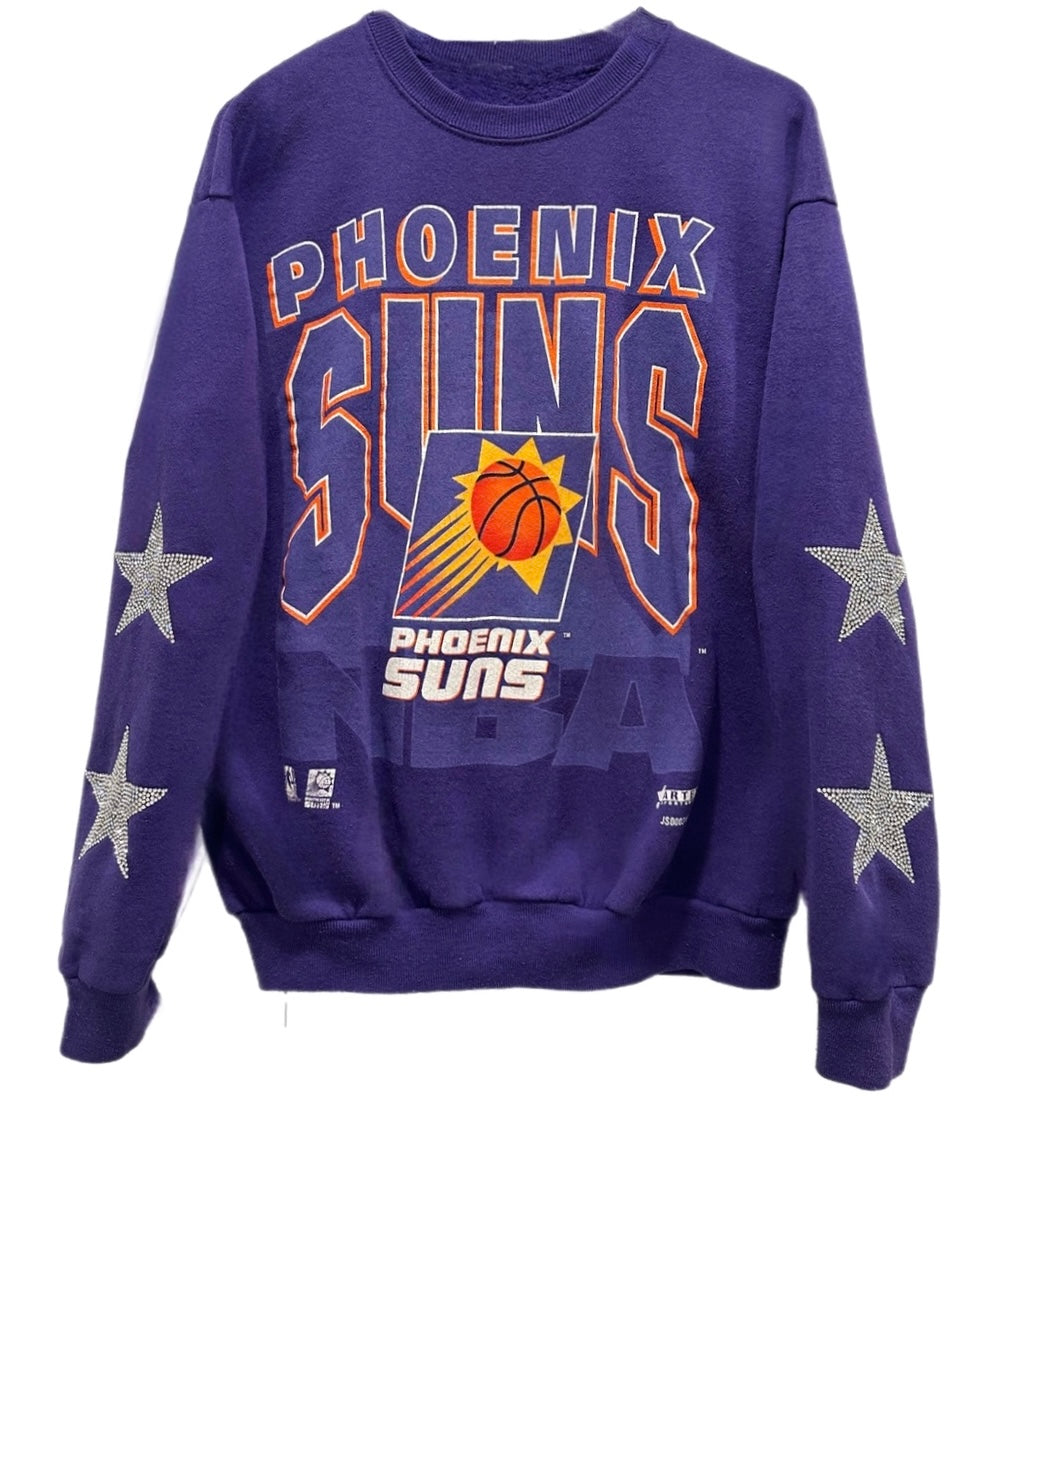 Phoenix Sun, NBA One of a KIND Vintage Sweatshirt with Crystal Star Design